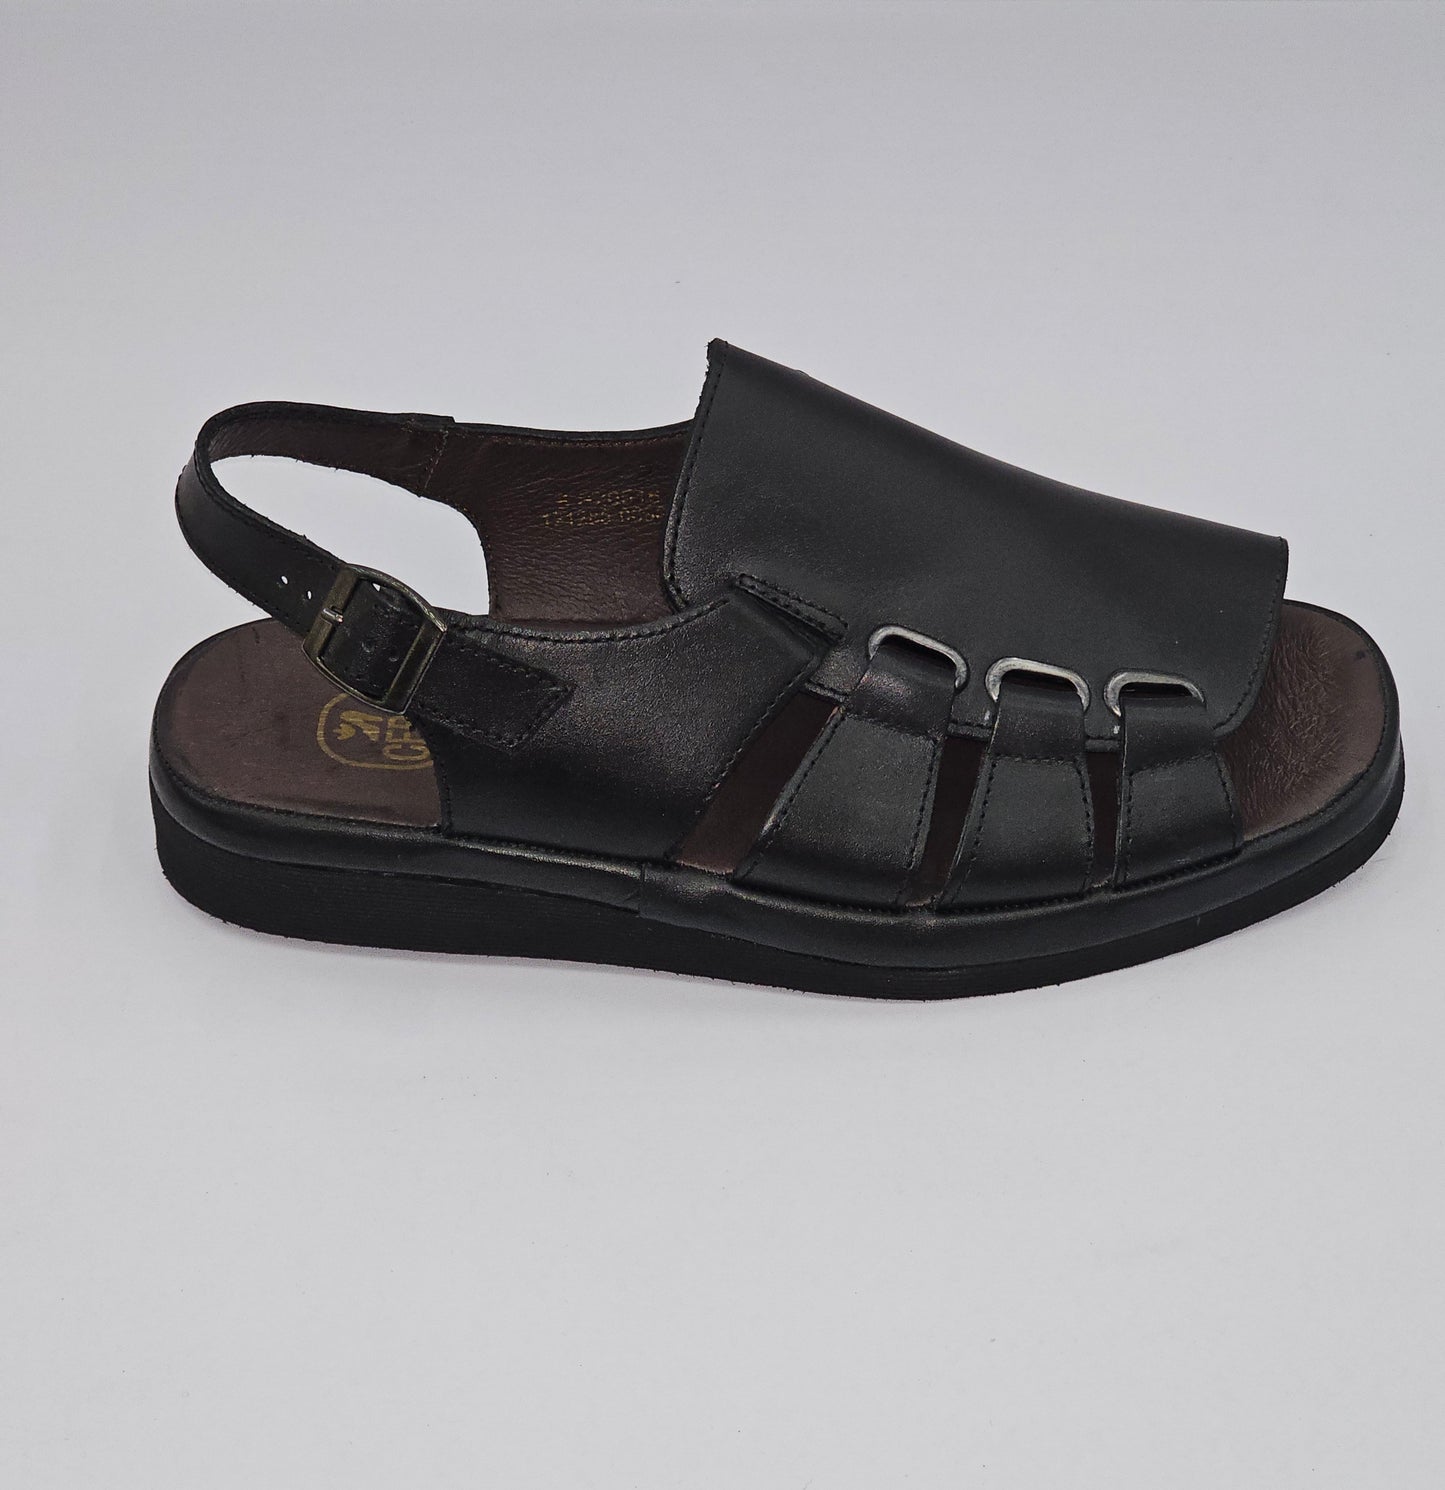 Cebo Sandals